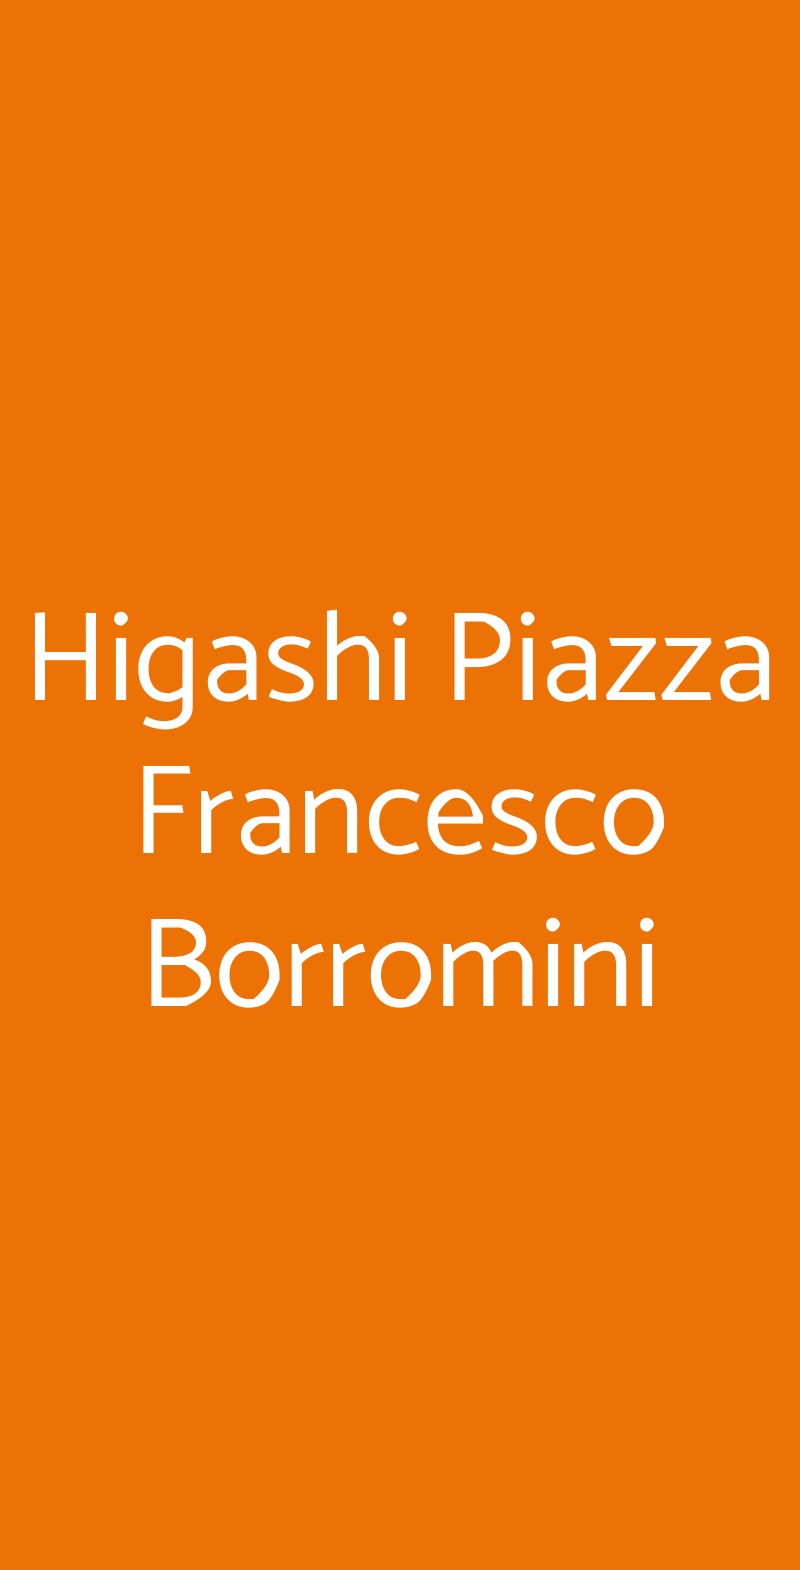 Higashi Piazza Francesco Borromini Torino menù 1 pagina